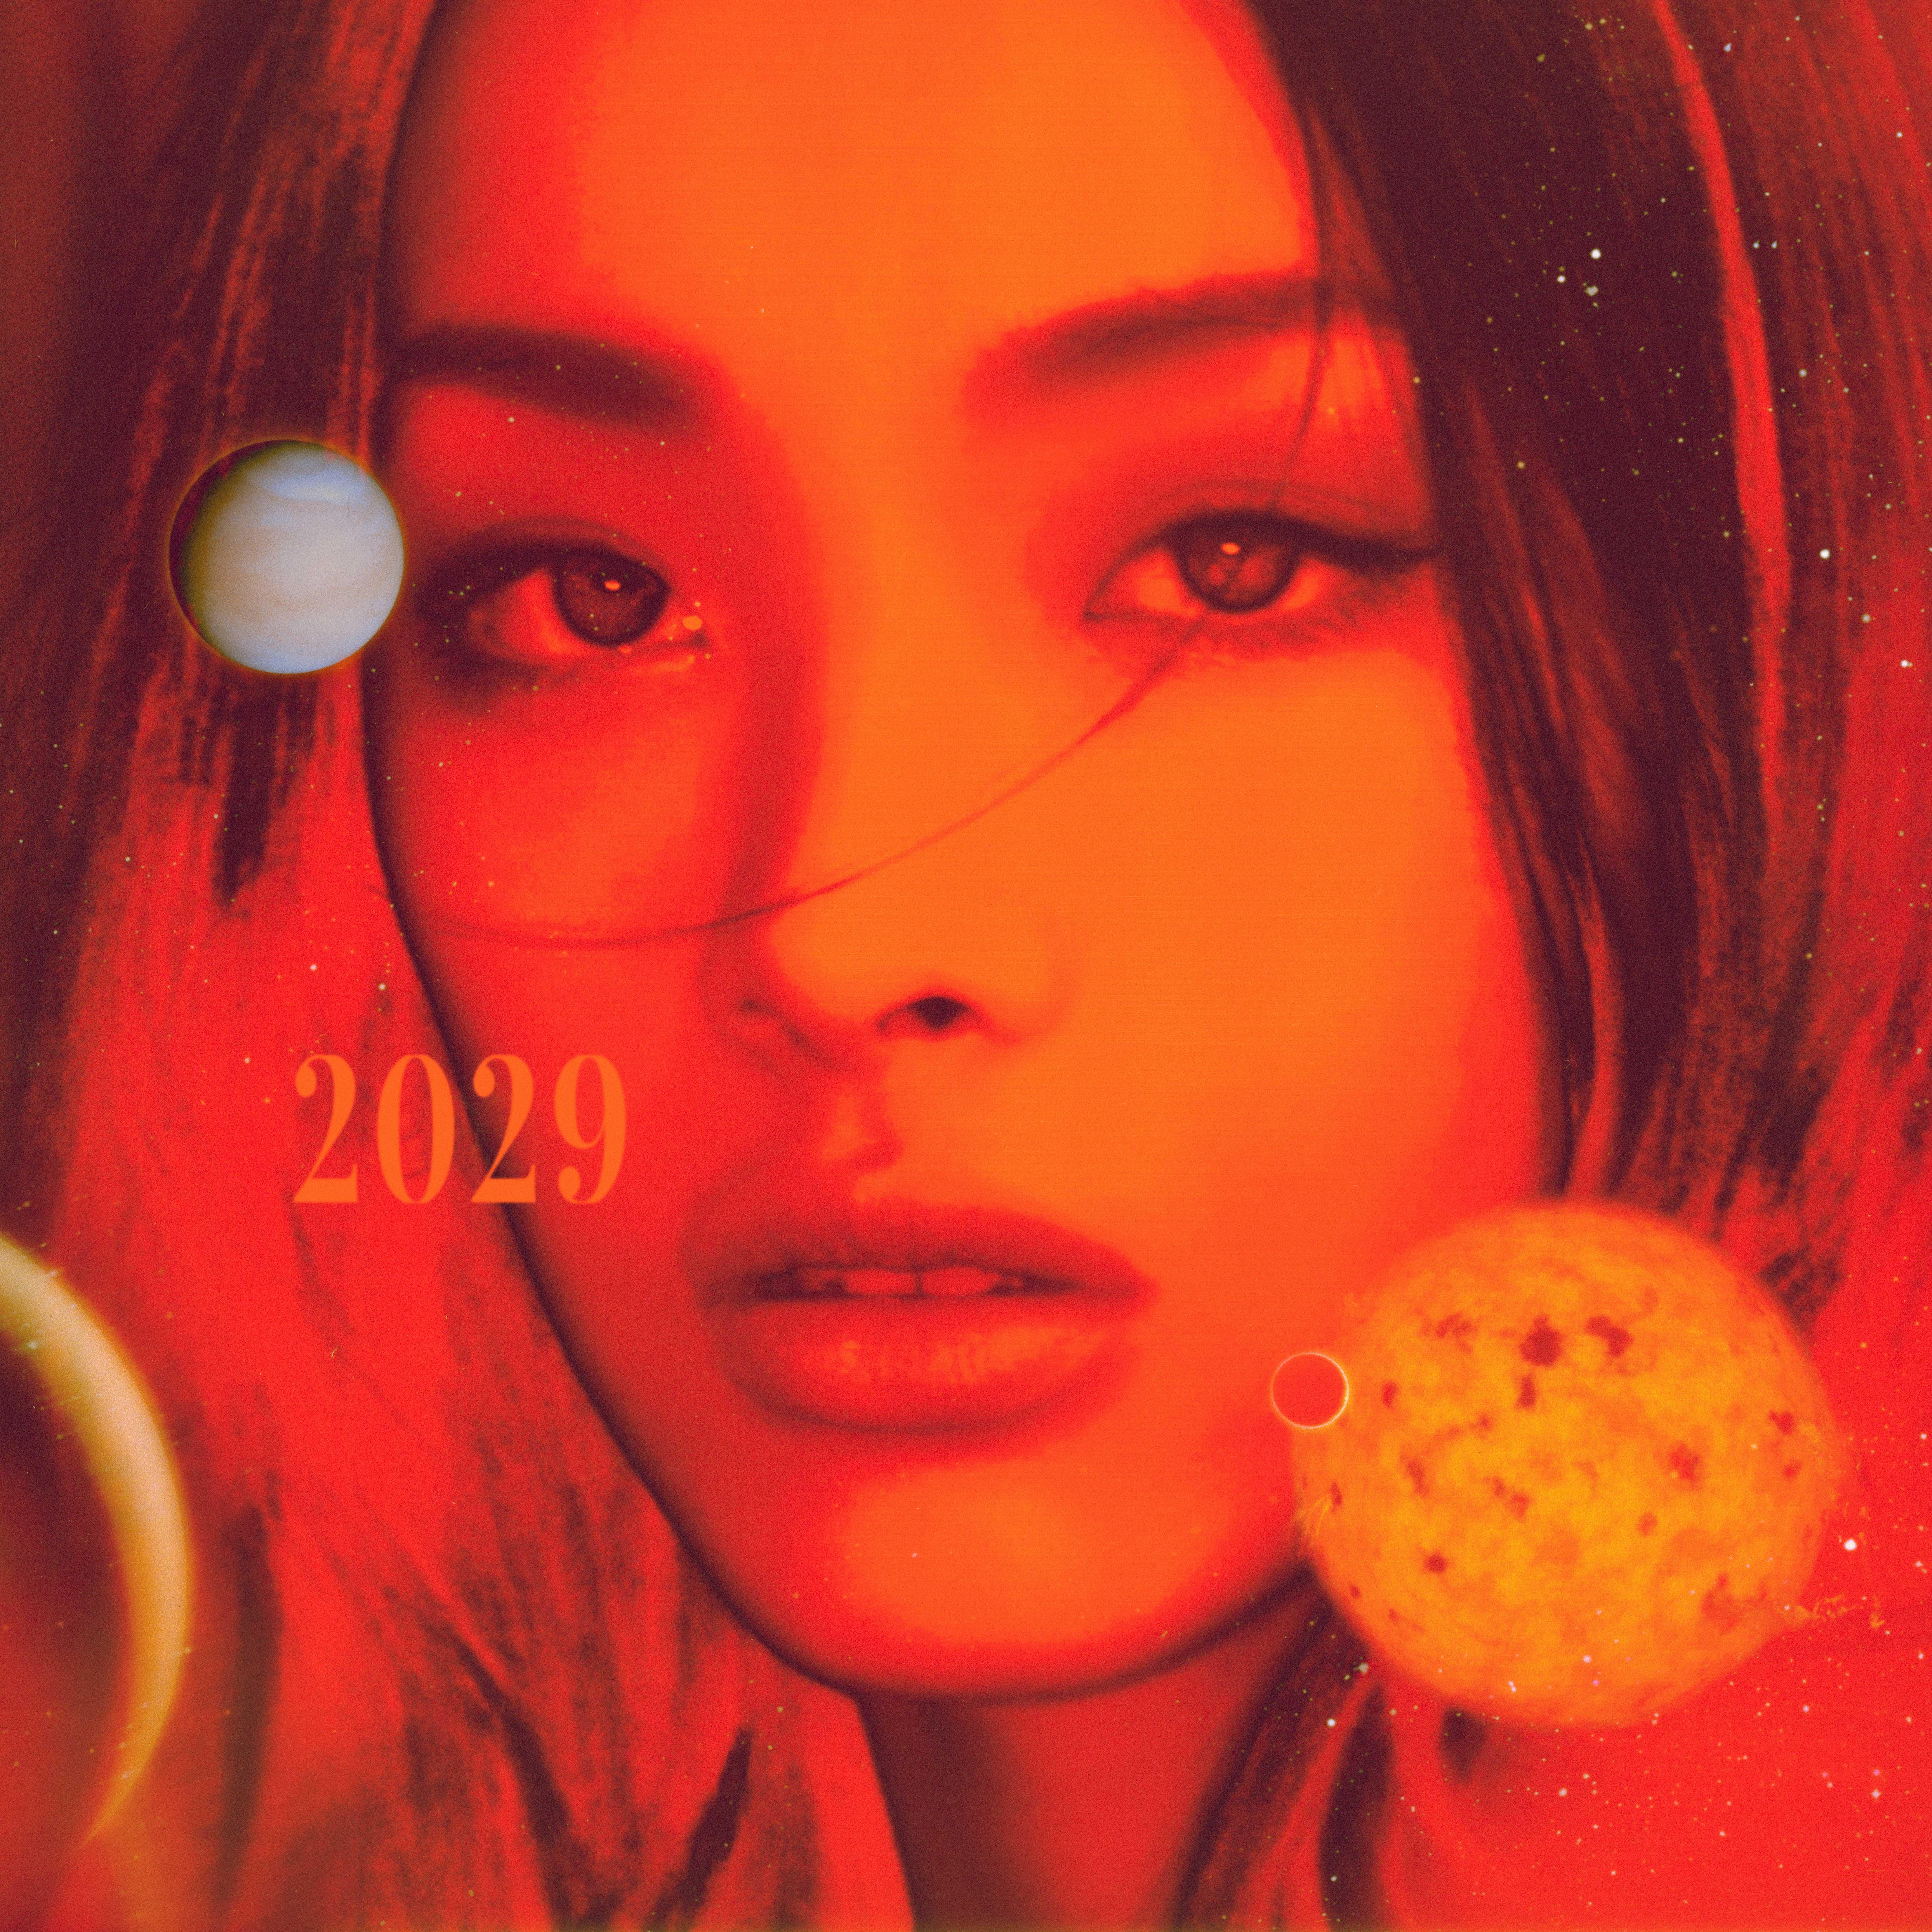 Mulan歌词 歌手刘柏辛Lexie-专辑2029-单曲《Mulan》LRC歌词下载